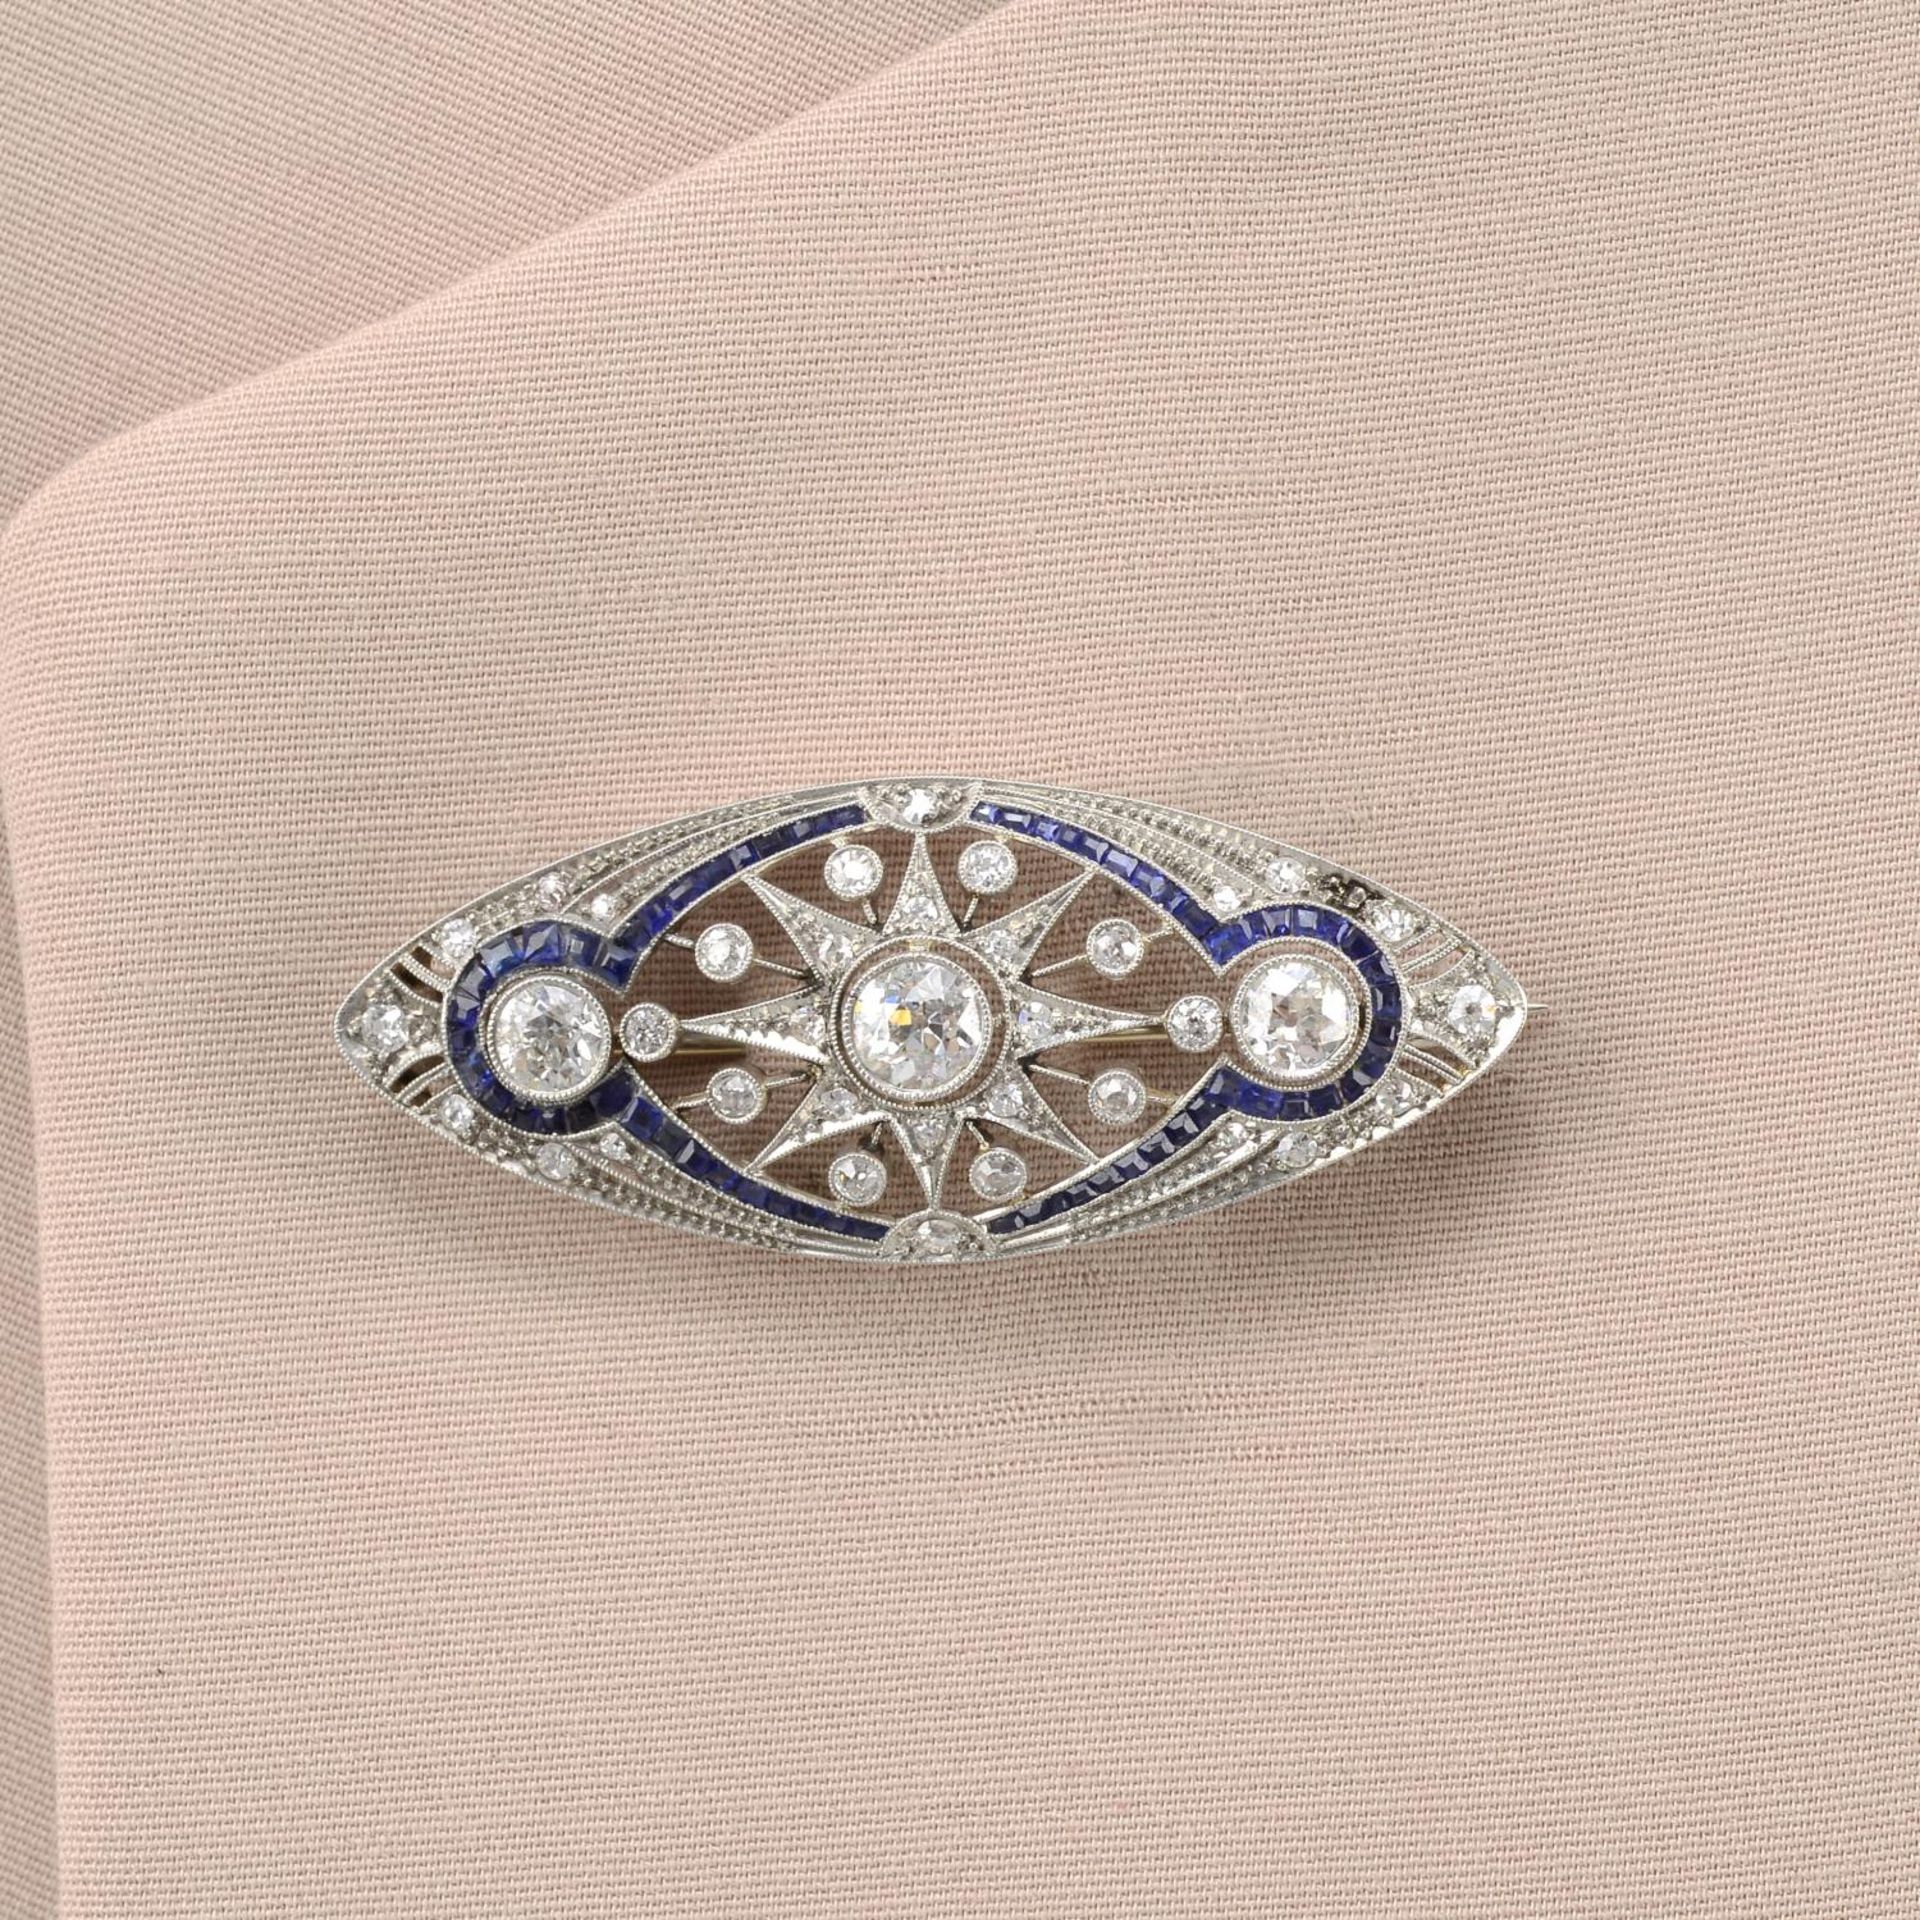 An old-cut diamond and calibre-cut sapphire openwork brooch.